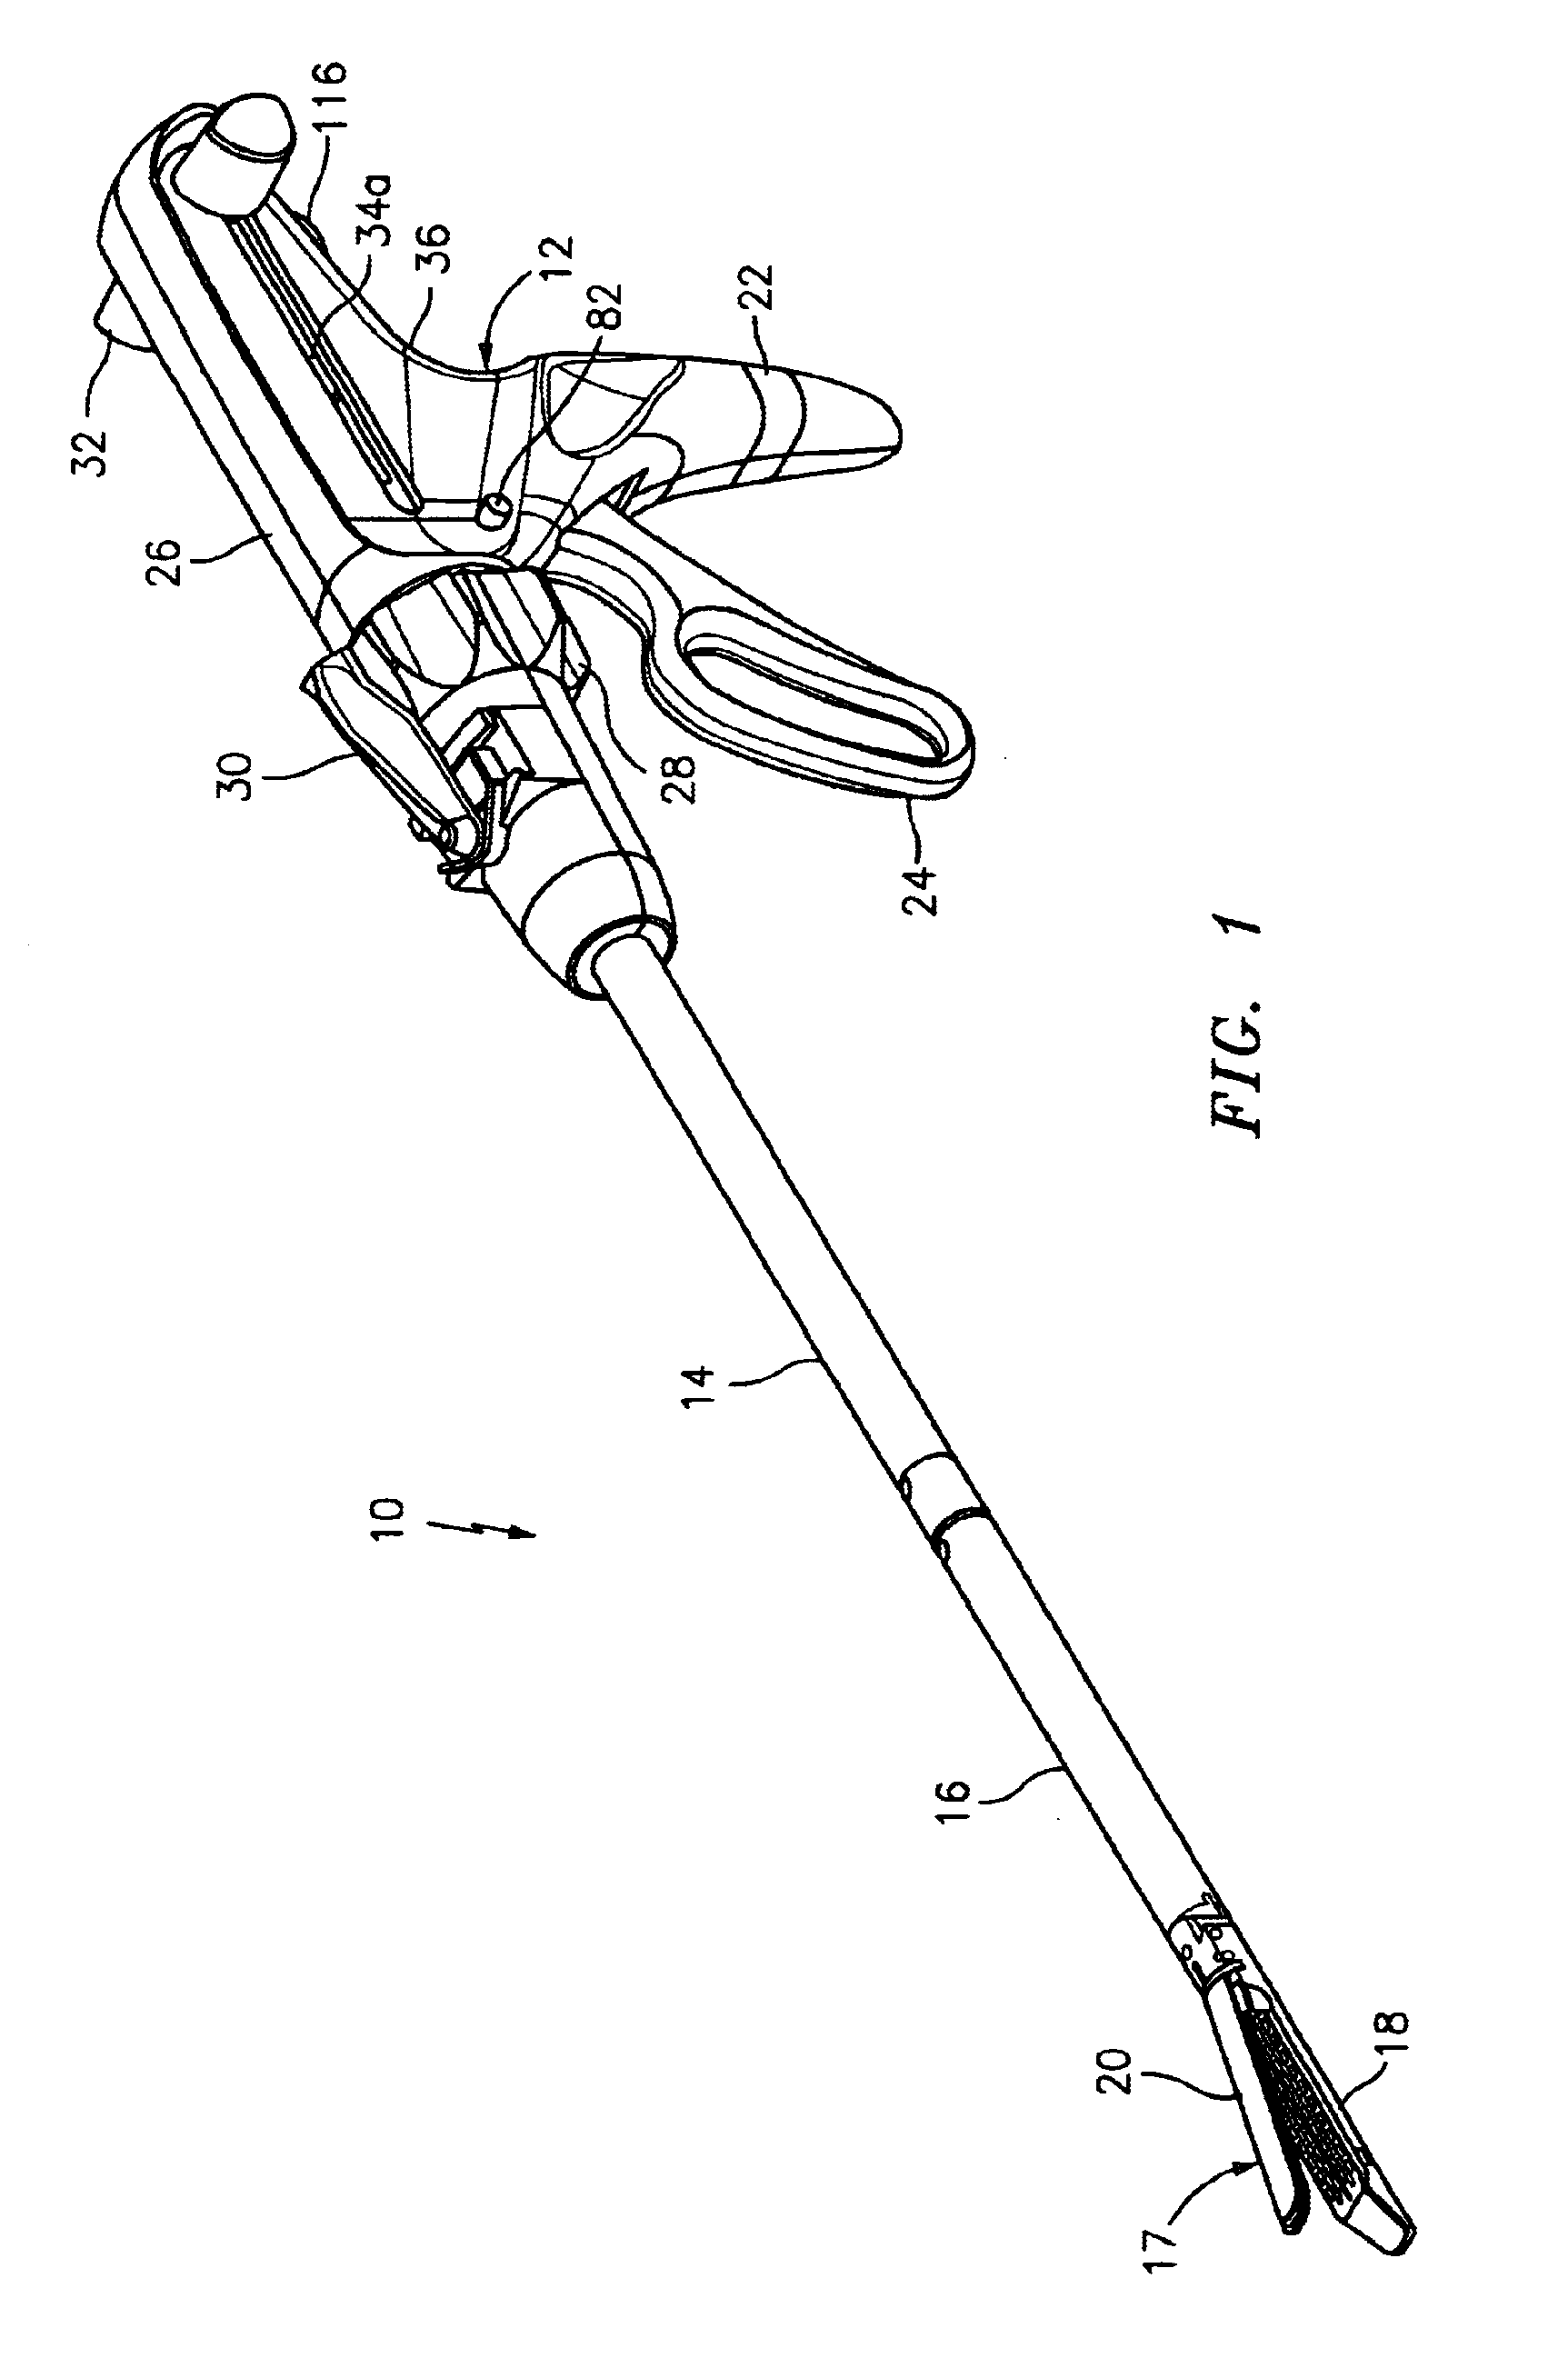 Surgical stapling apparatus